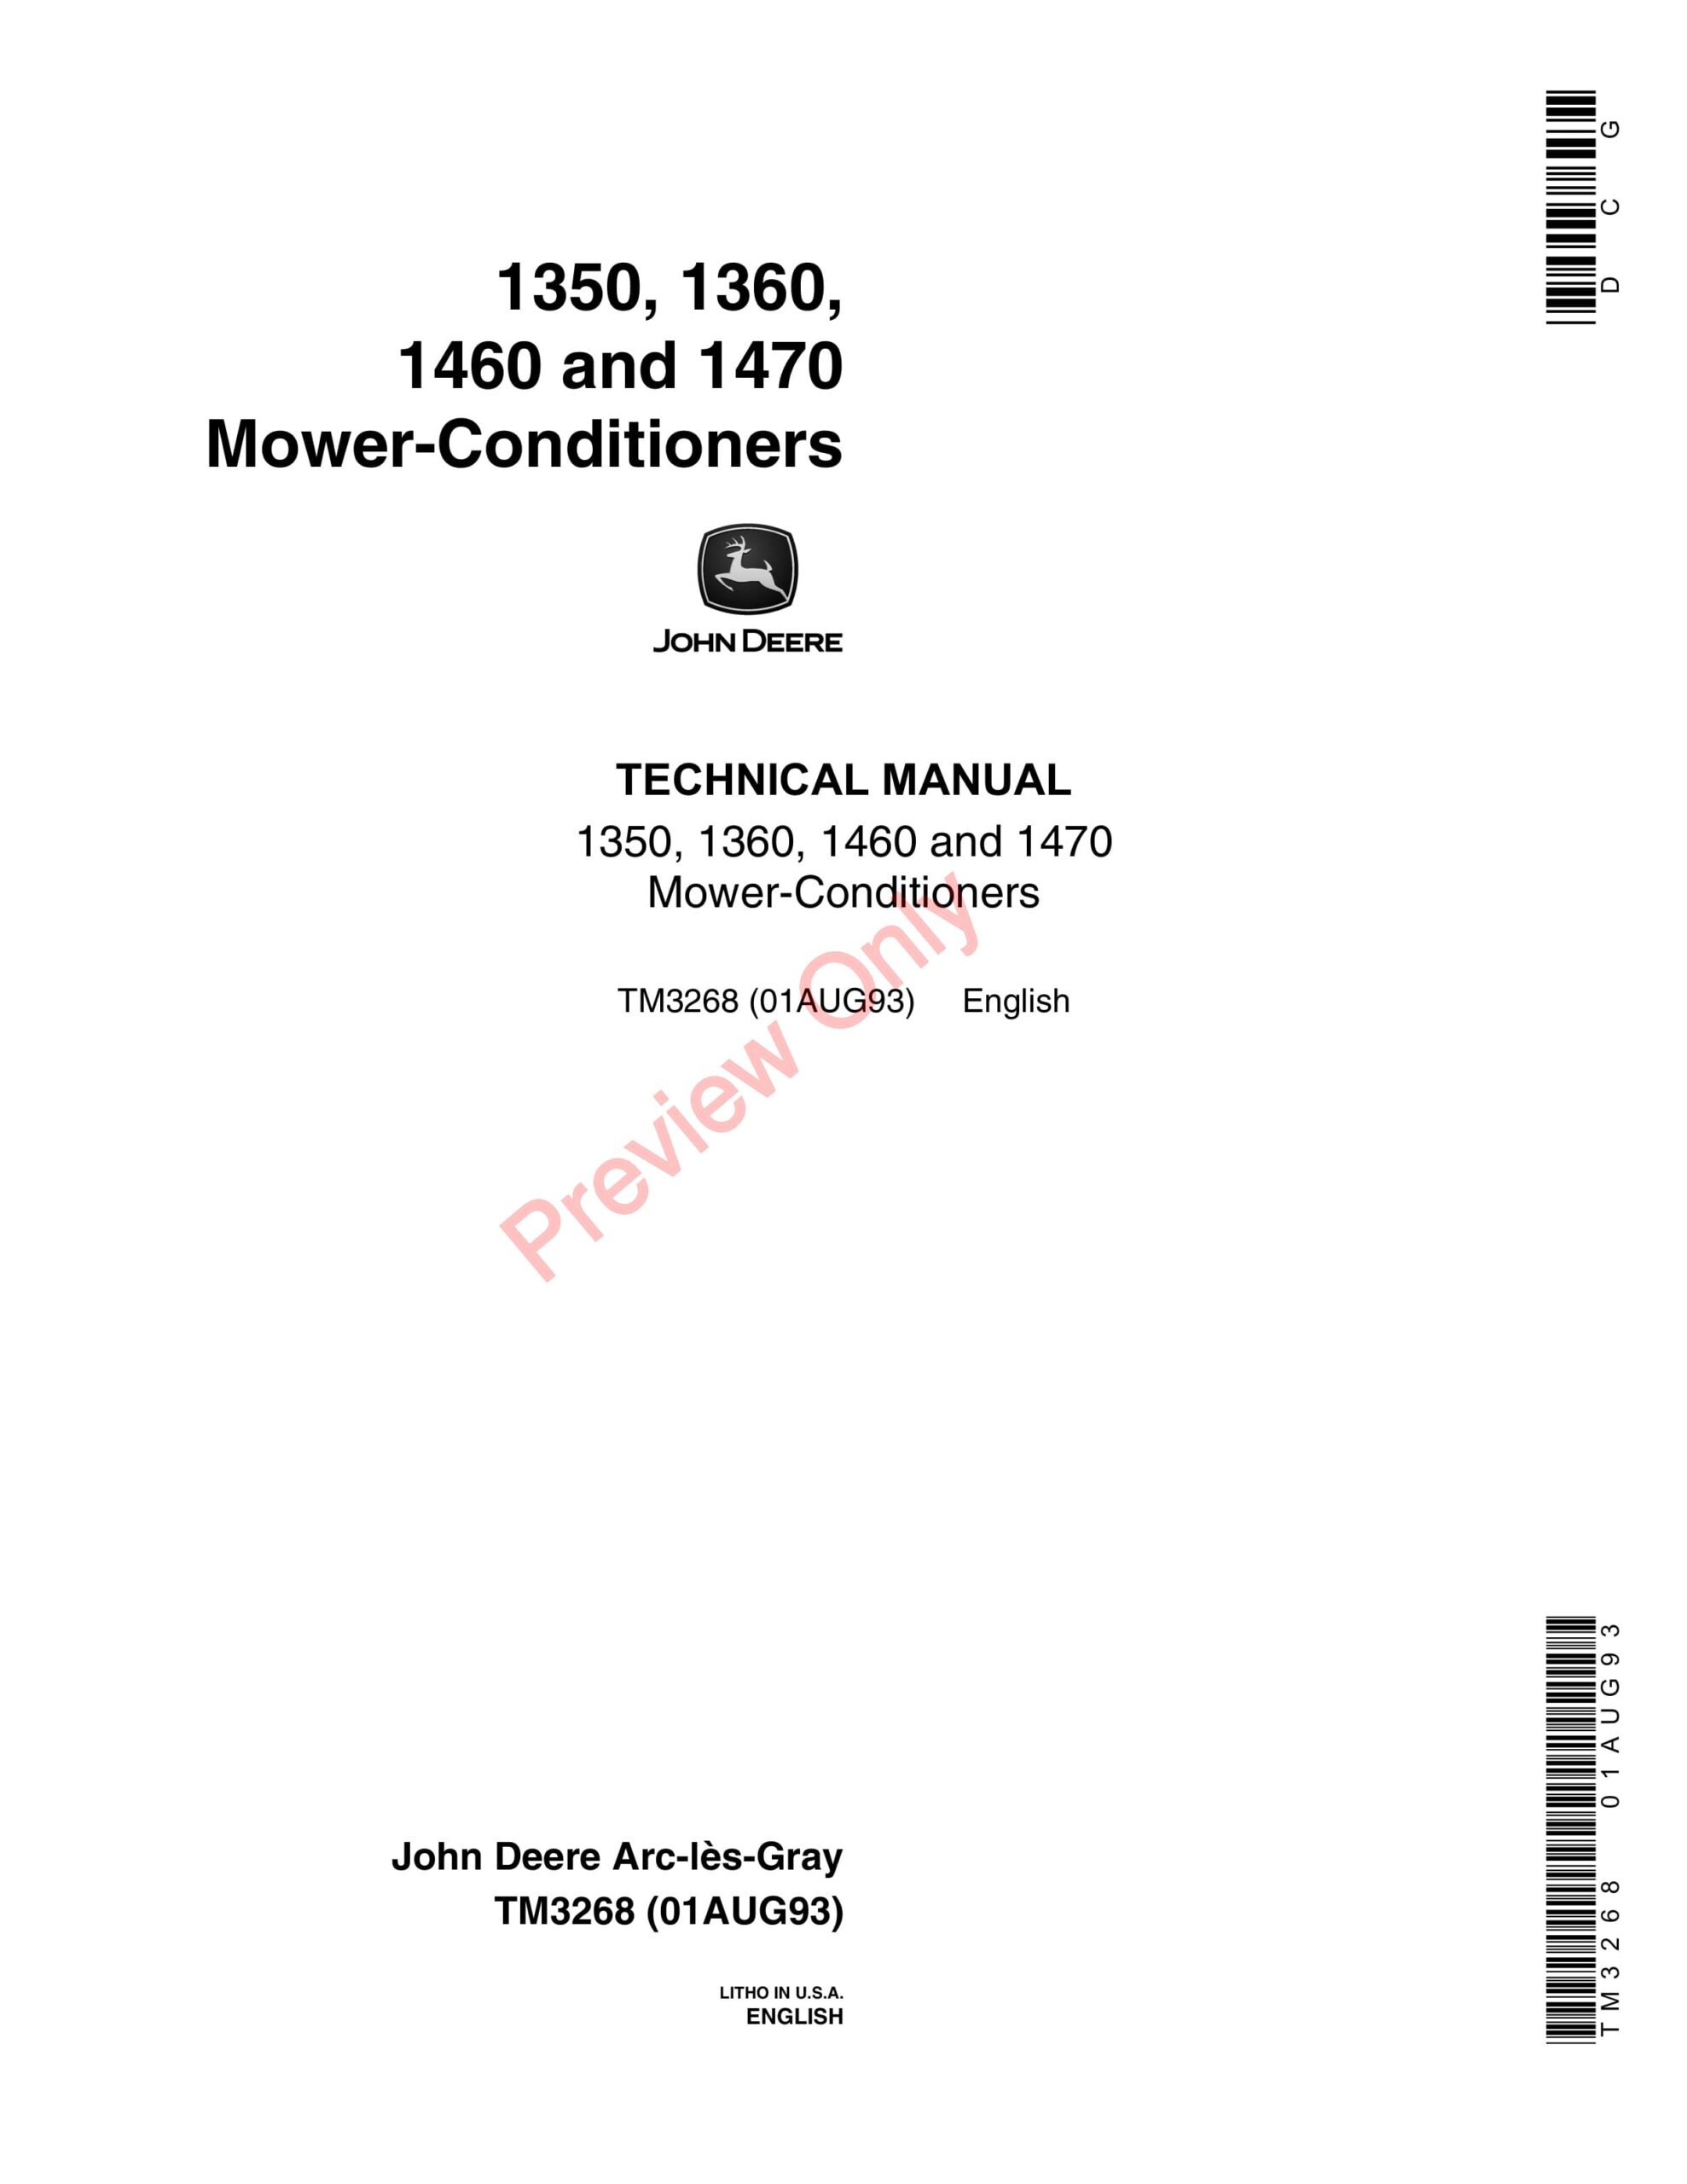 John Deere 1350, 1360, 1460, 1470 Mower-Conditioner Technical Manual TM3268 01AUG93-1